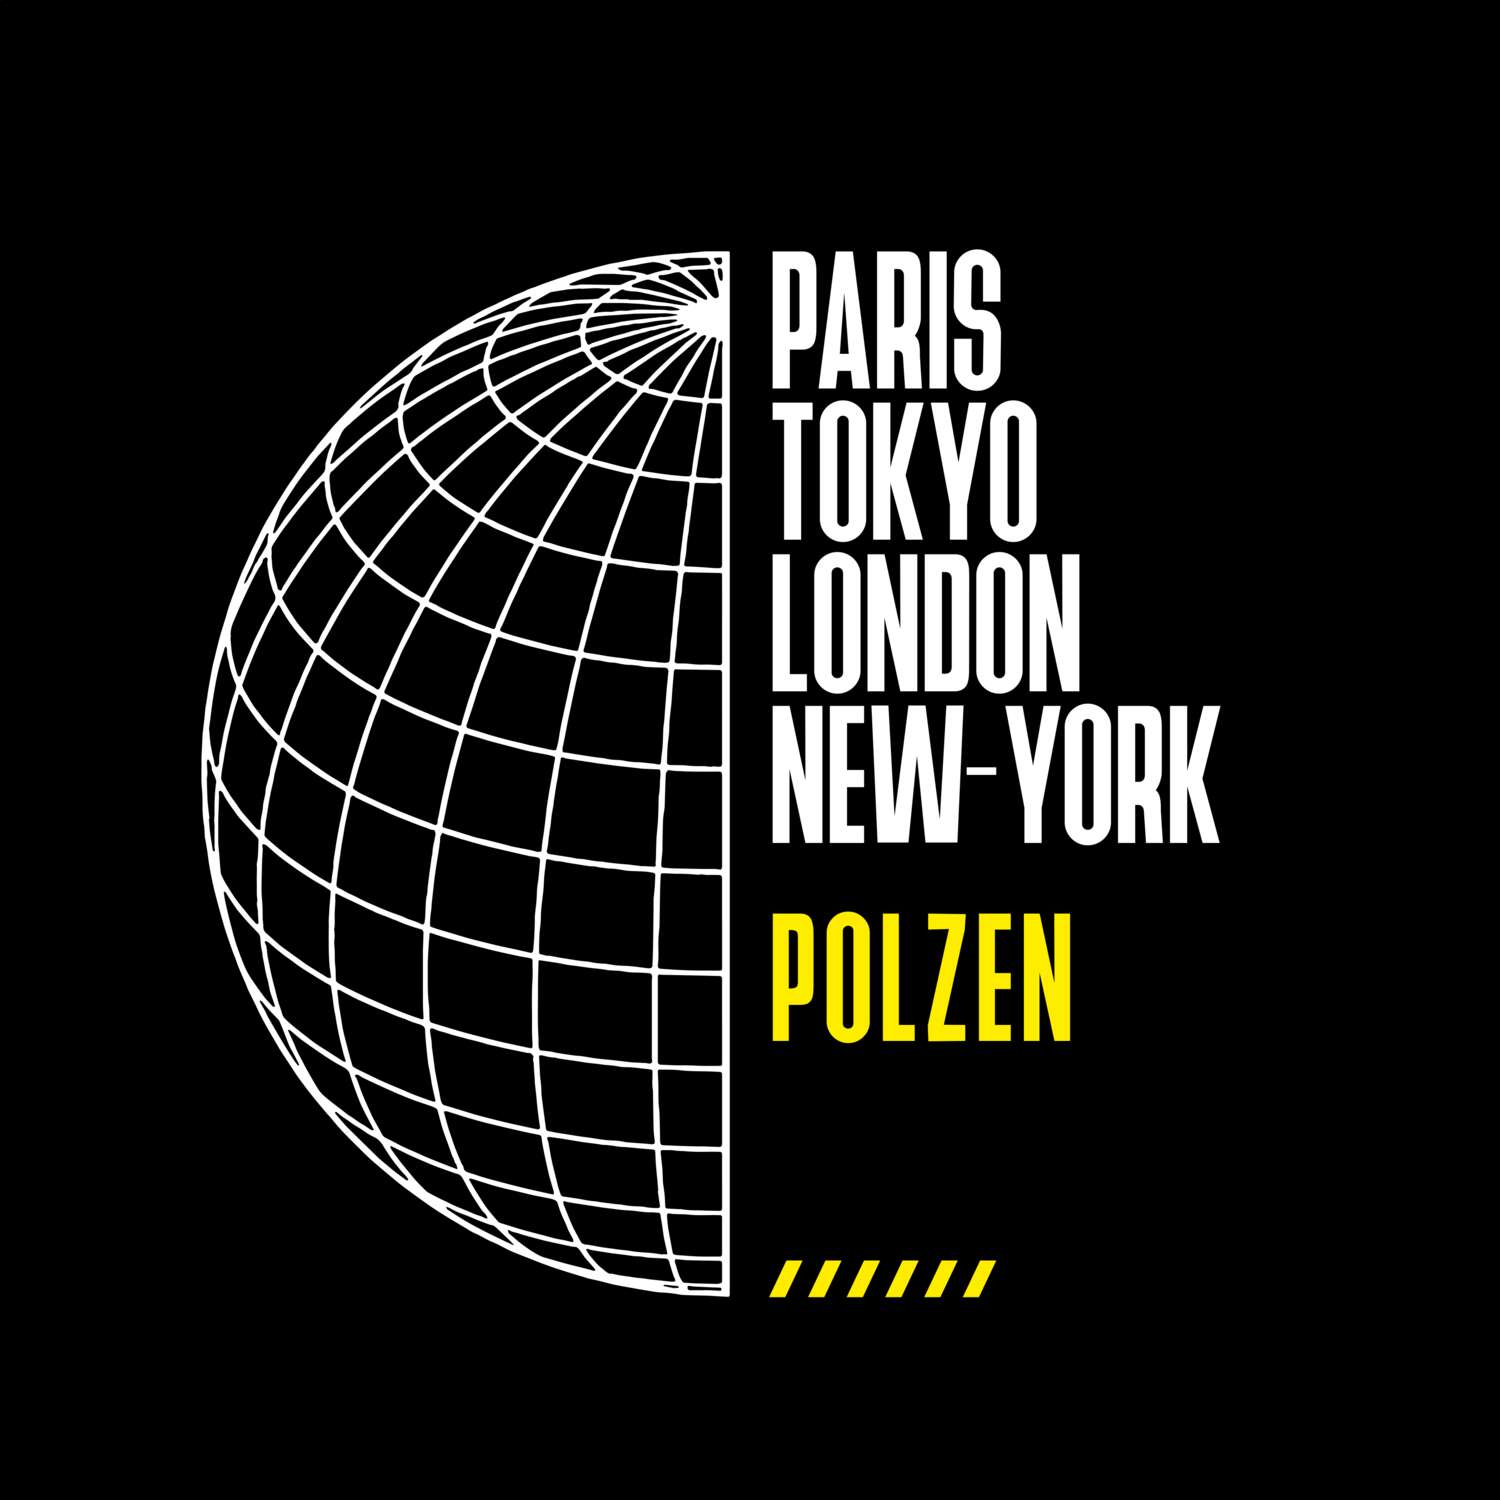 Polzen T-Shirt »Paris Tokyo London«